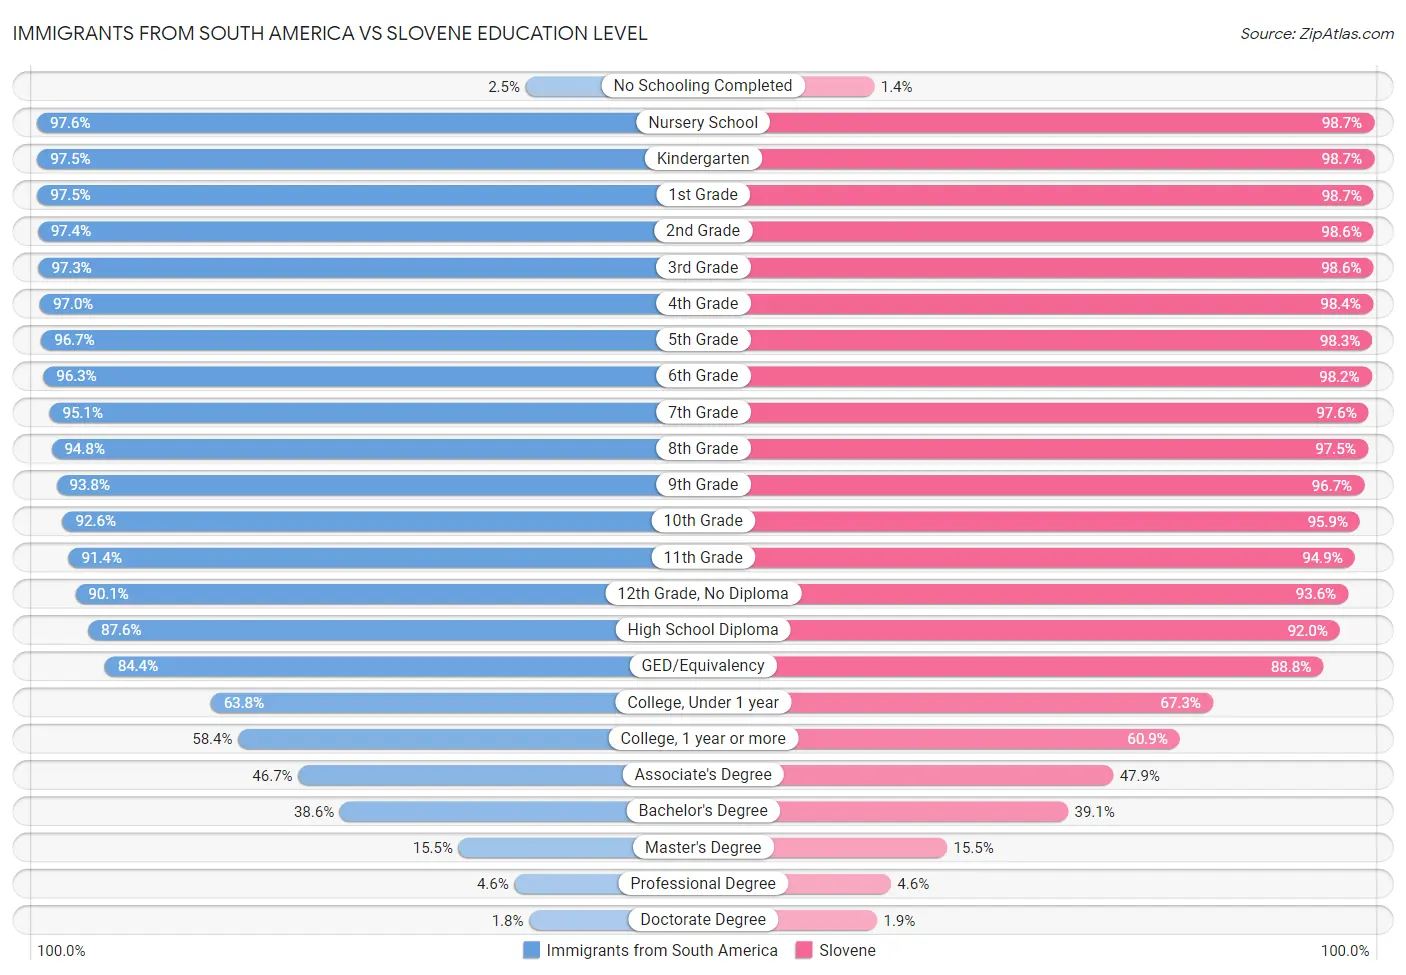 Immigrants from South America vs Slovene Education Level